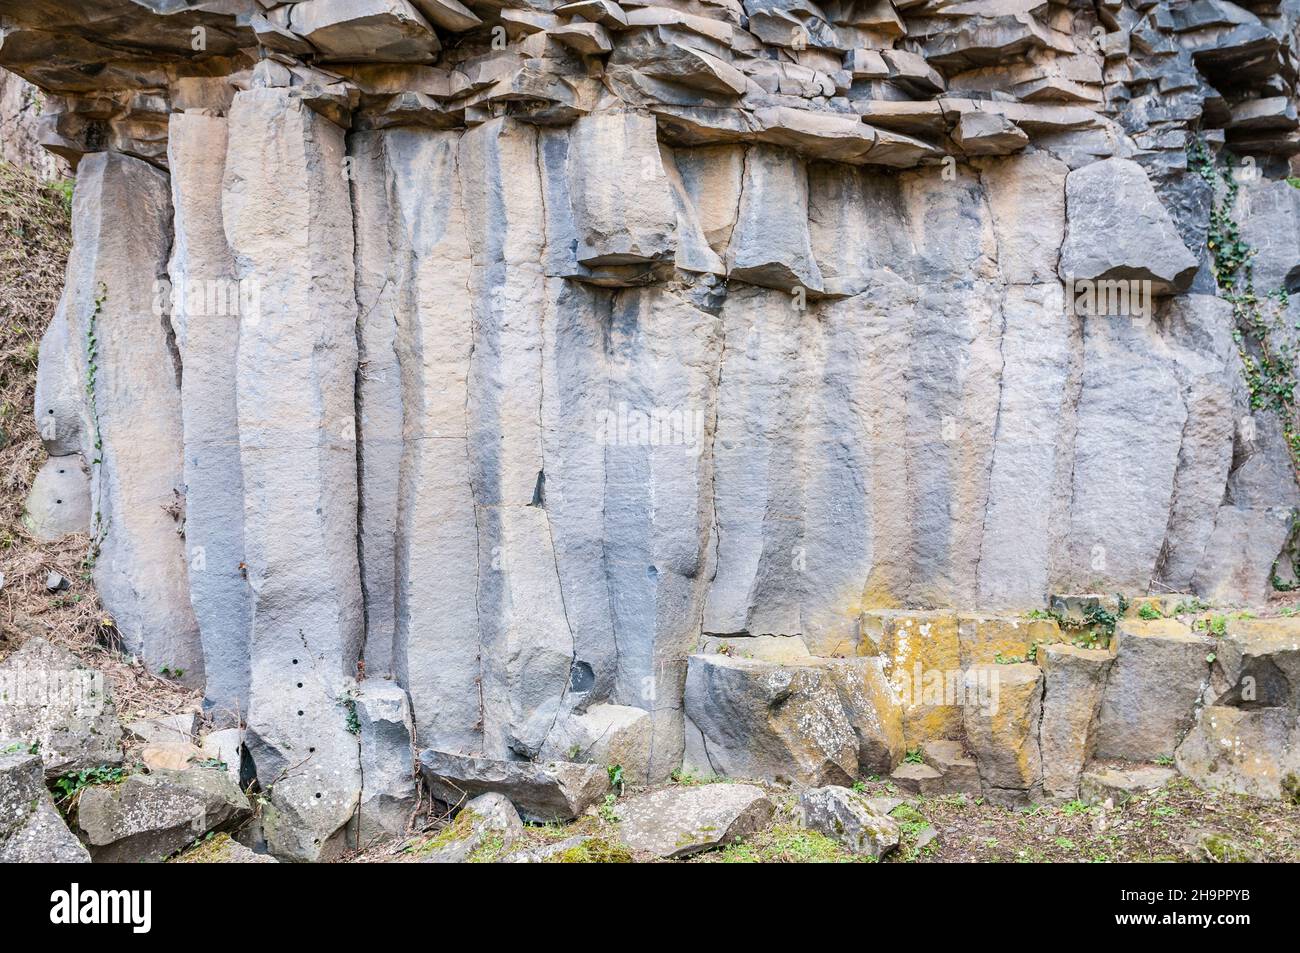 Columnas de lava verticales, flujo de lava antigua, columna de basalto, forma hexagonal, Sant Joan les Fonts, Garrotxa, Cataluña, España Foto de stock